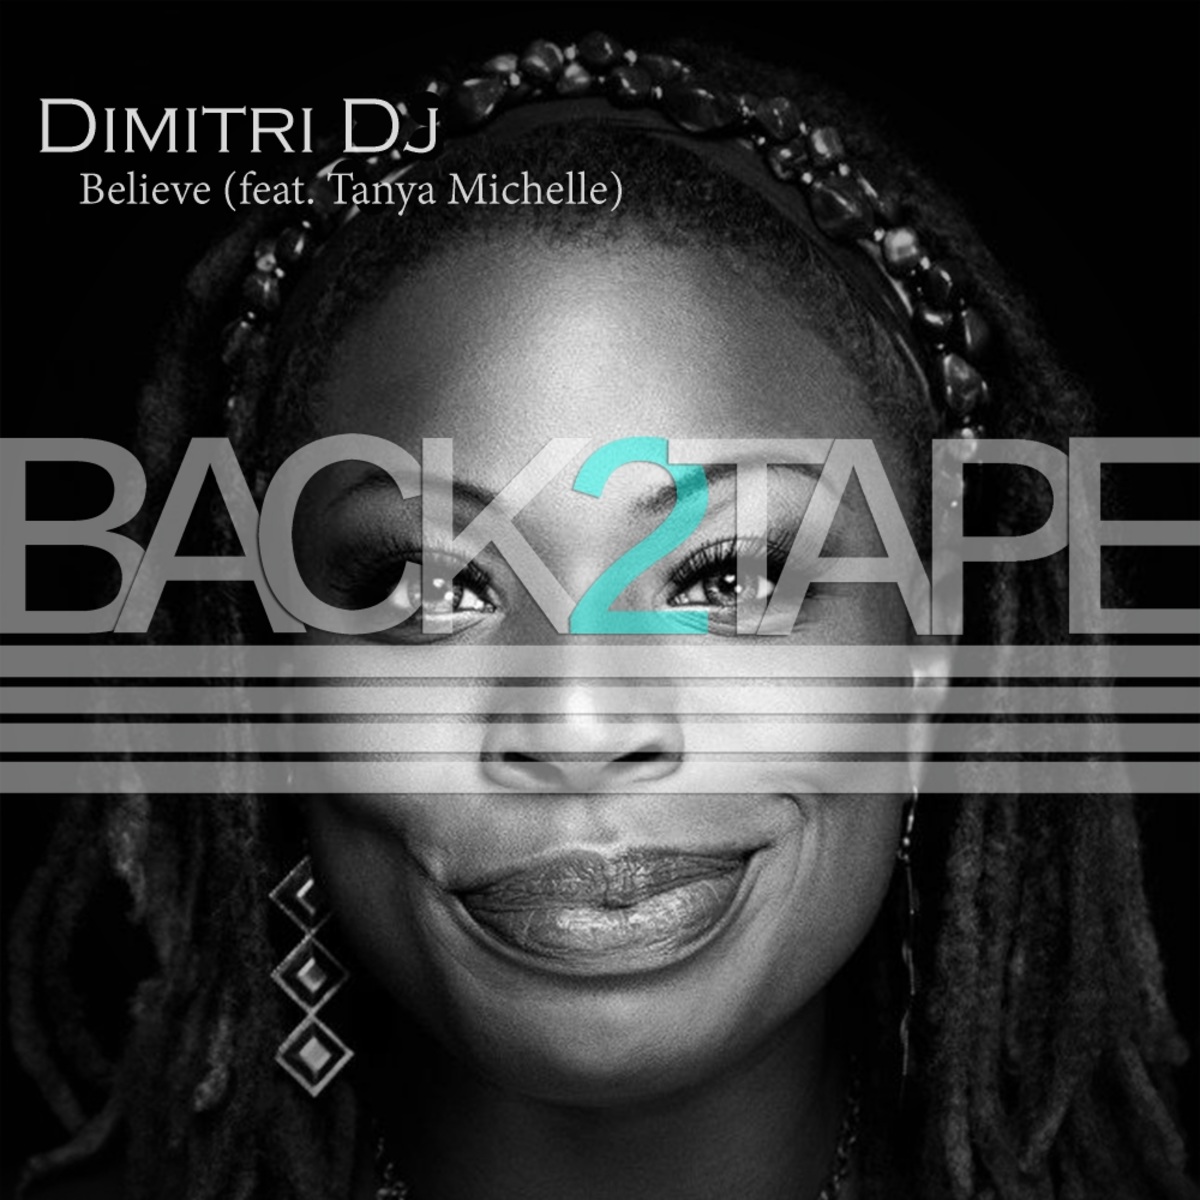 Dimitri Dj - Believe / Back2tape